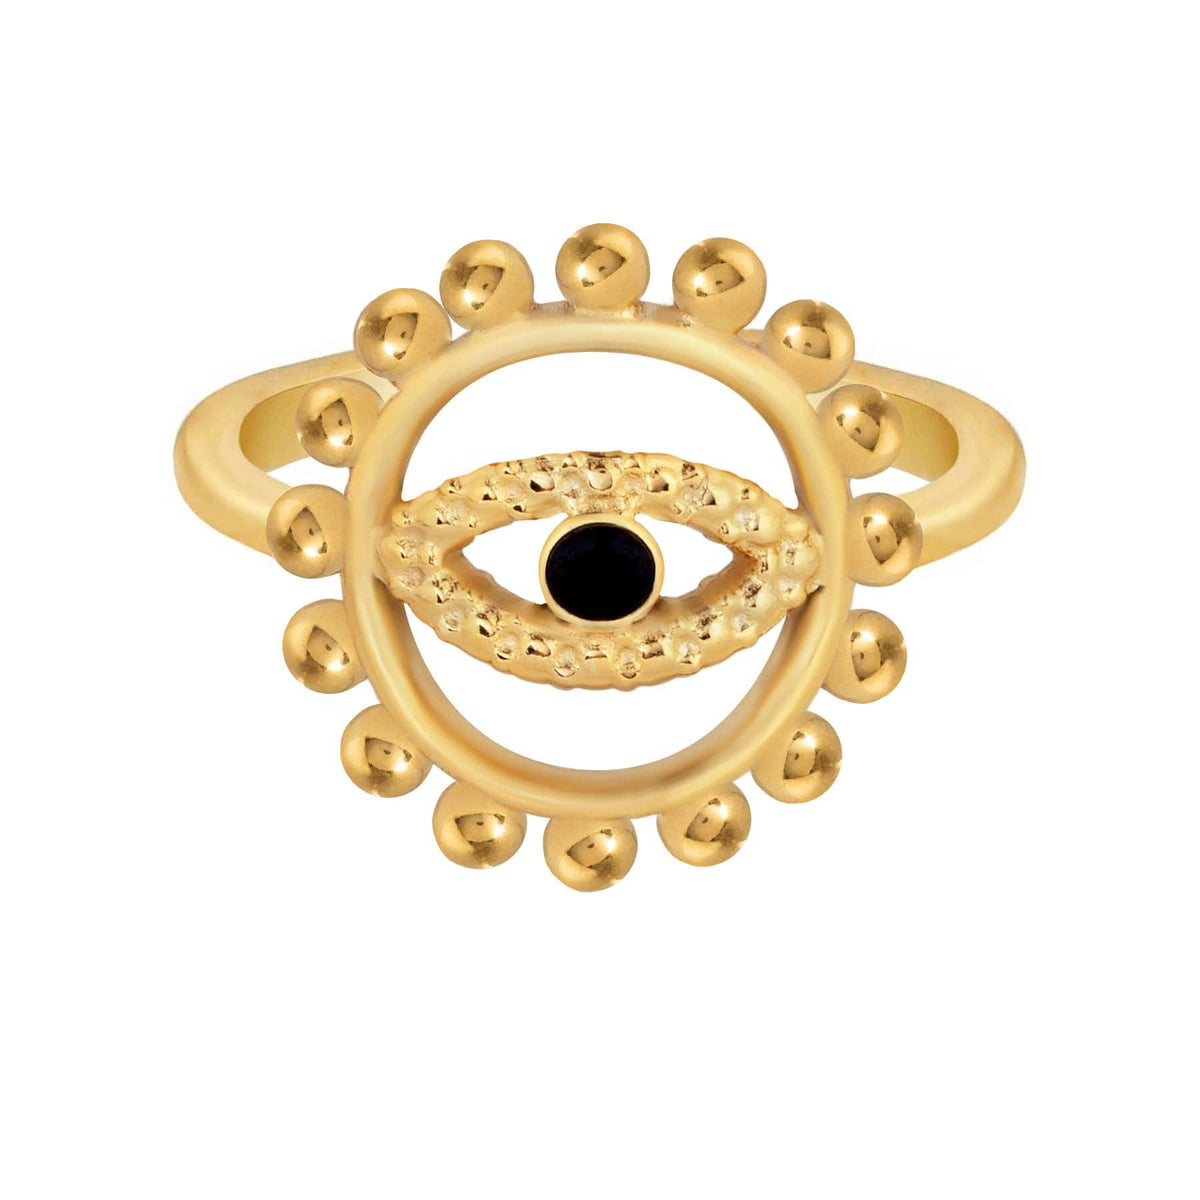 BohoMoon Stainless Steel Third Eye Ring Gold / Adjustable